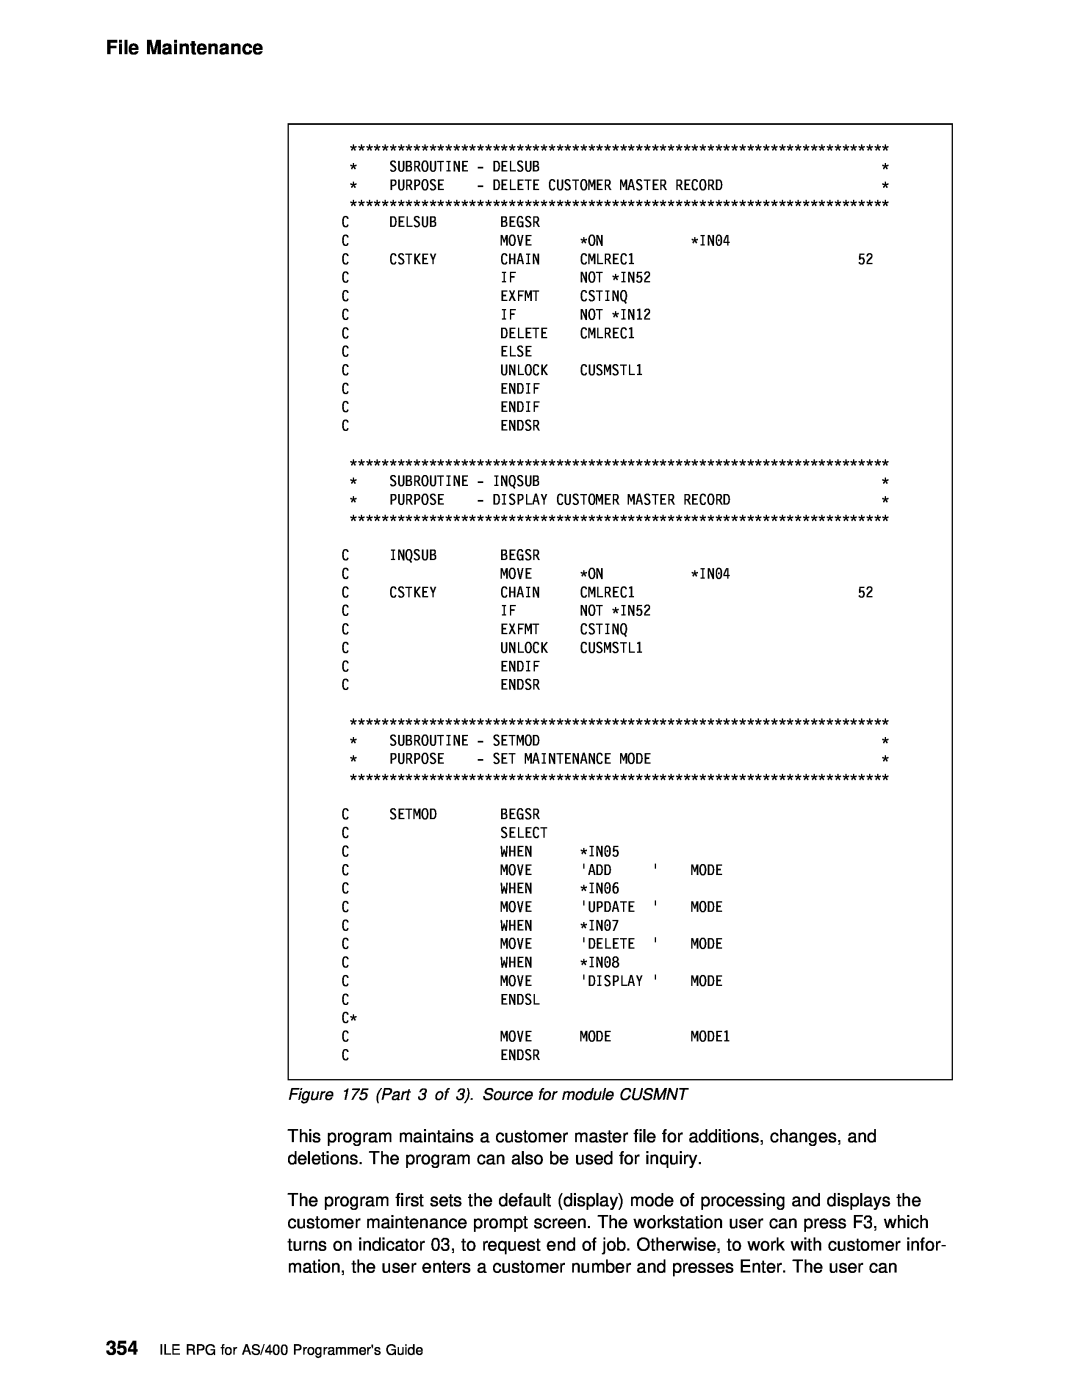 IBM manual File Maintenance, ILE RPG for AS/400 Programmers Guide, Set Maintenance Mode 